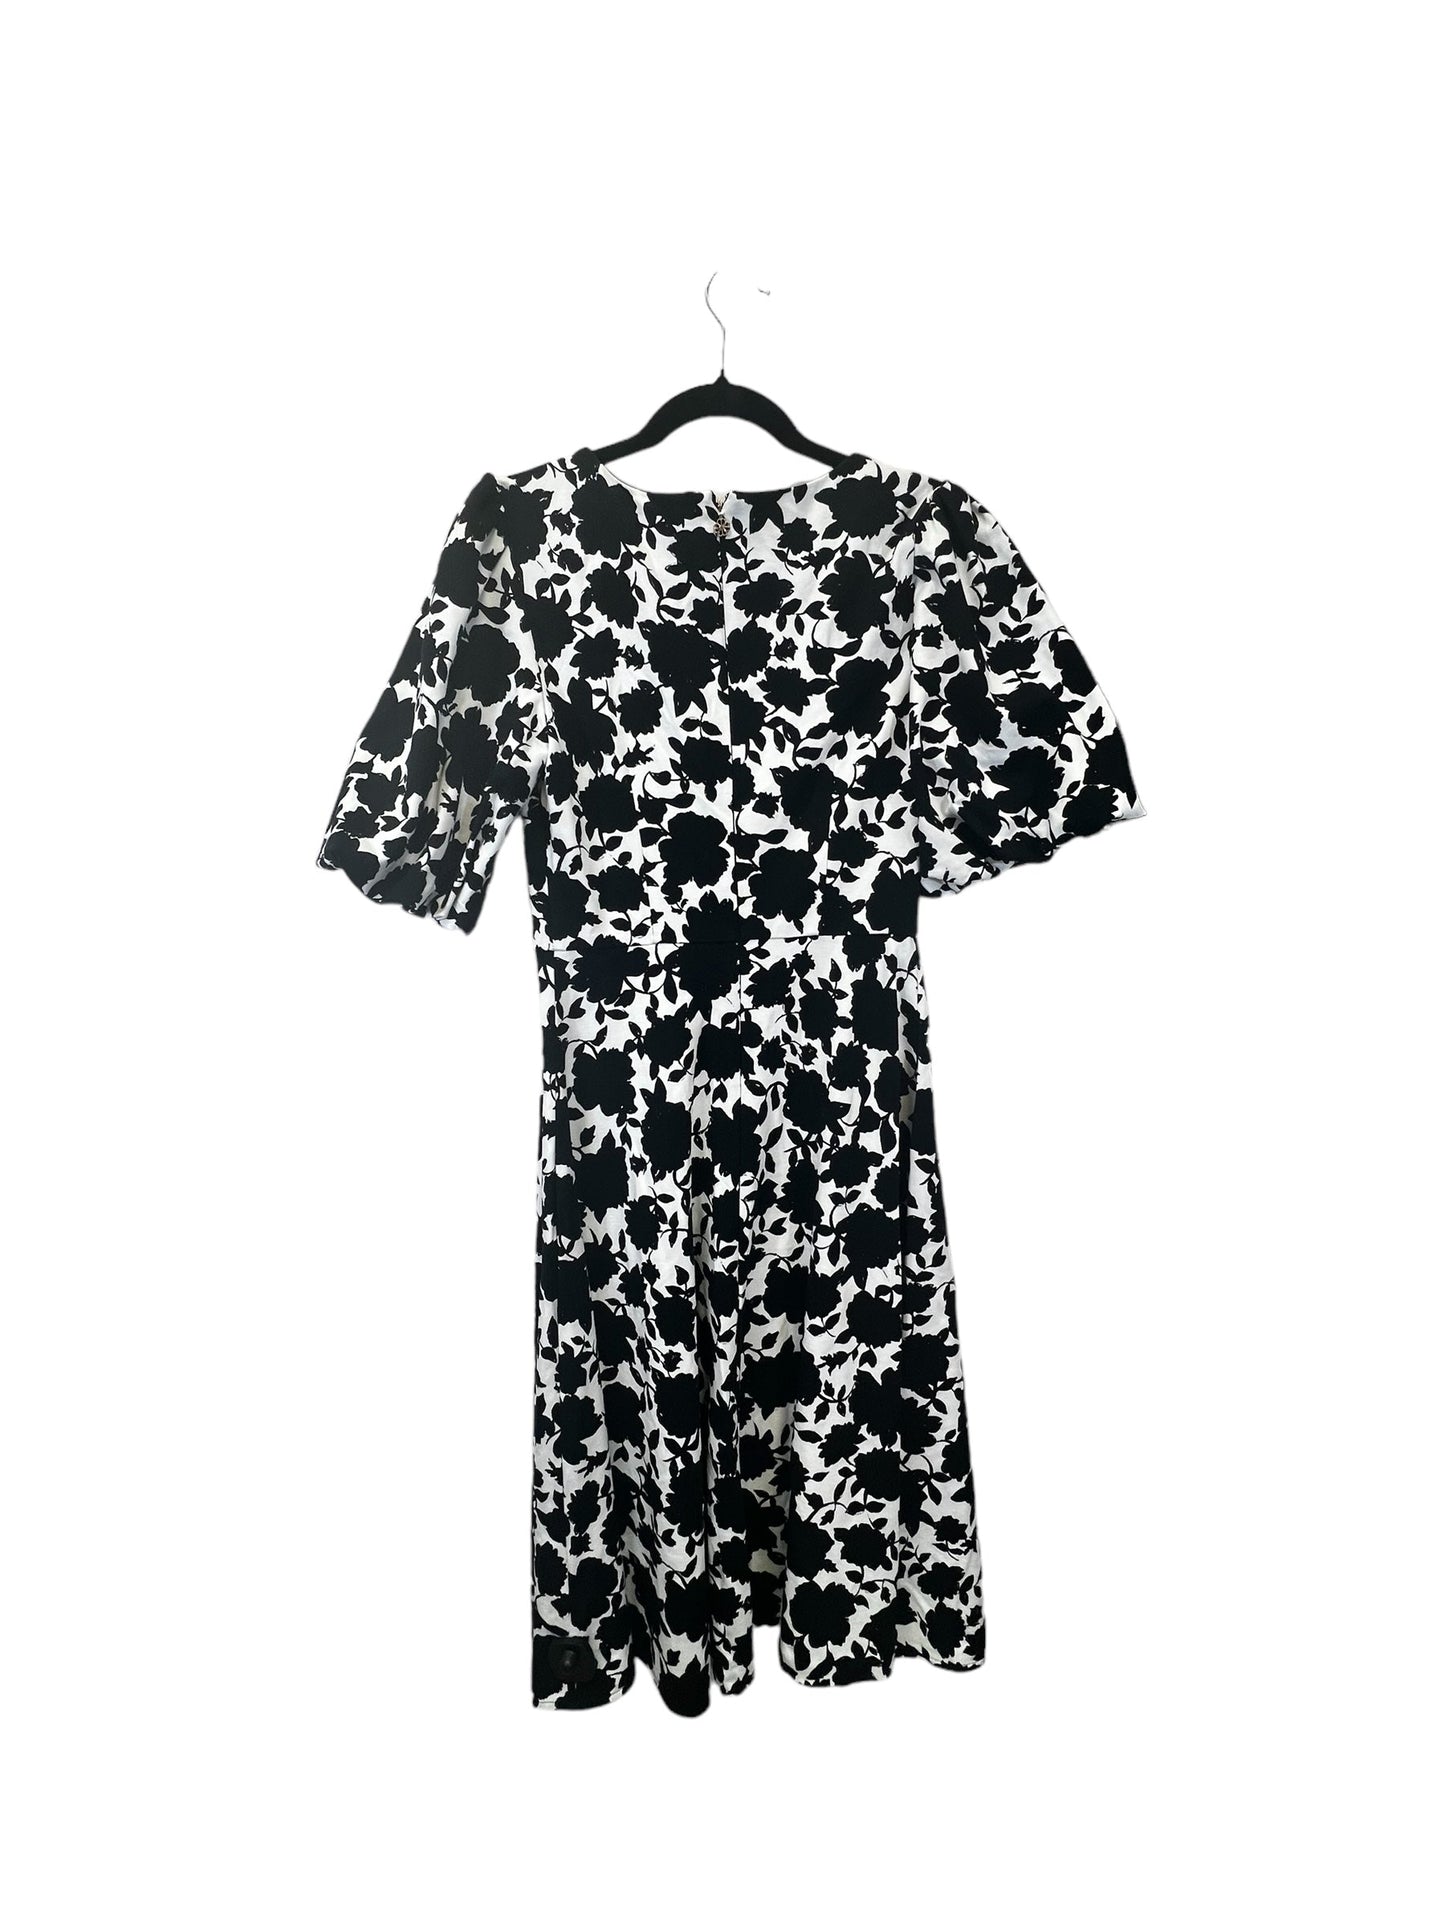 Black & White Dress Designer Kate Spade, Size S